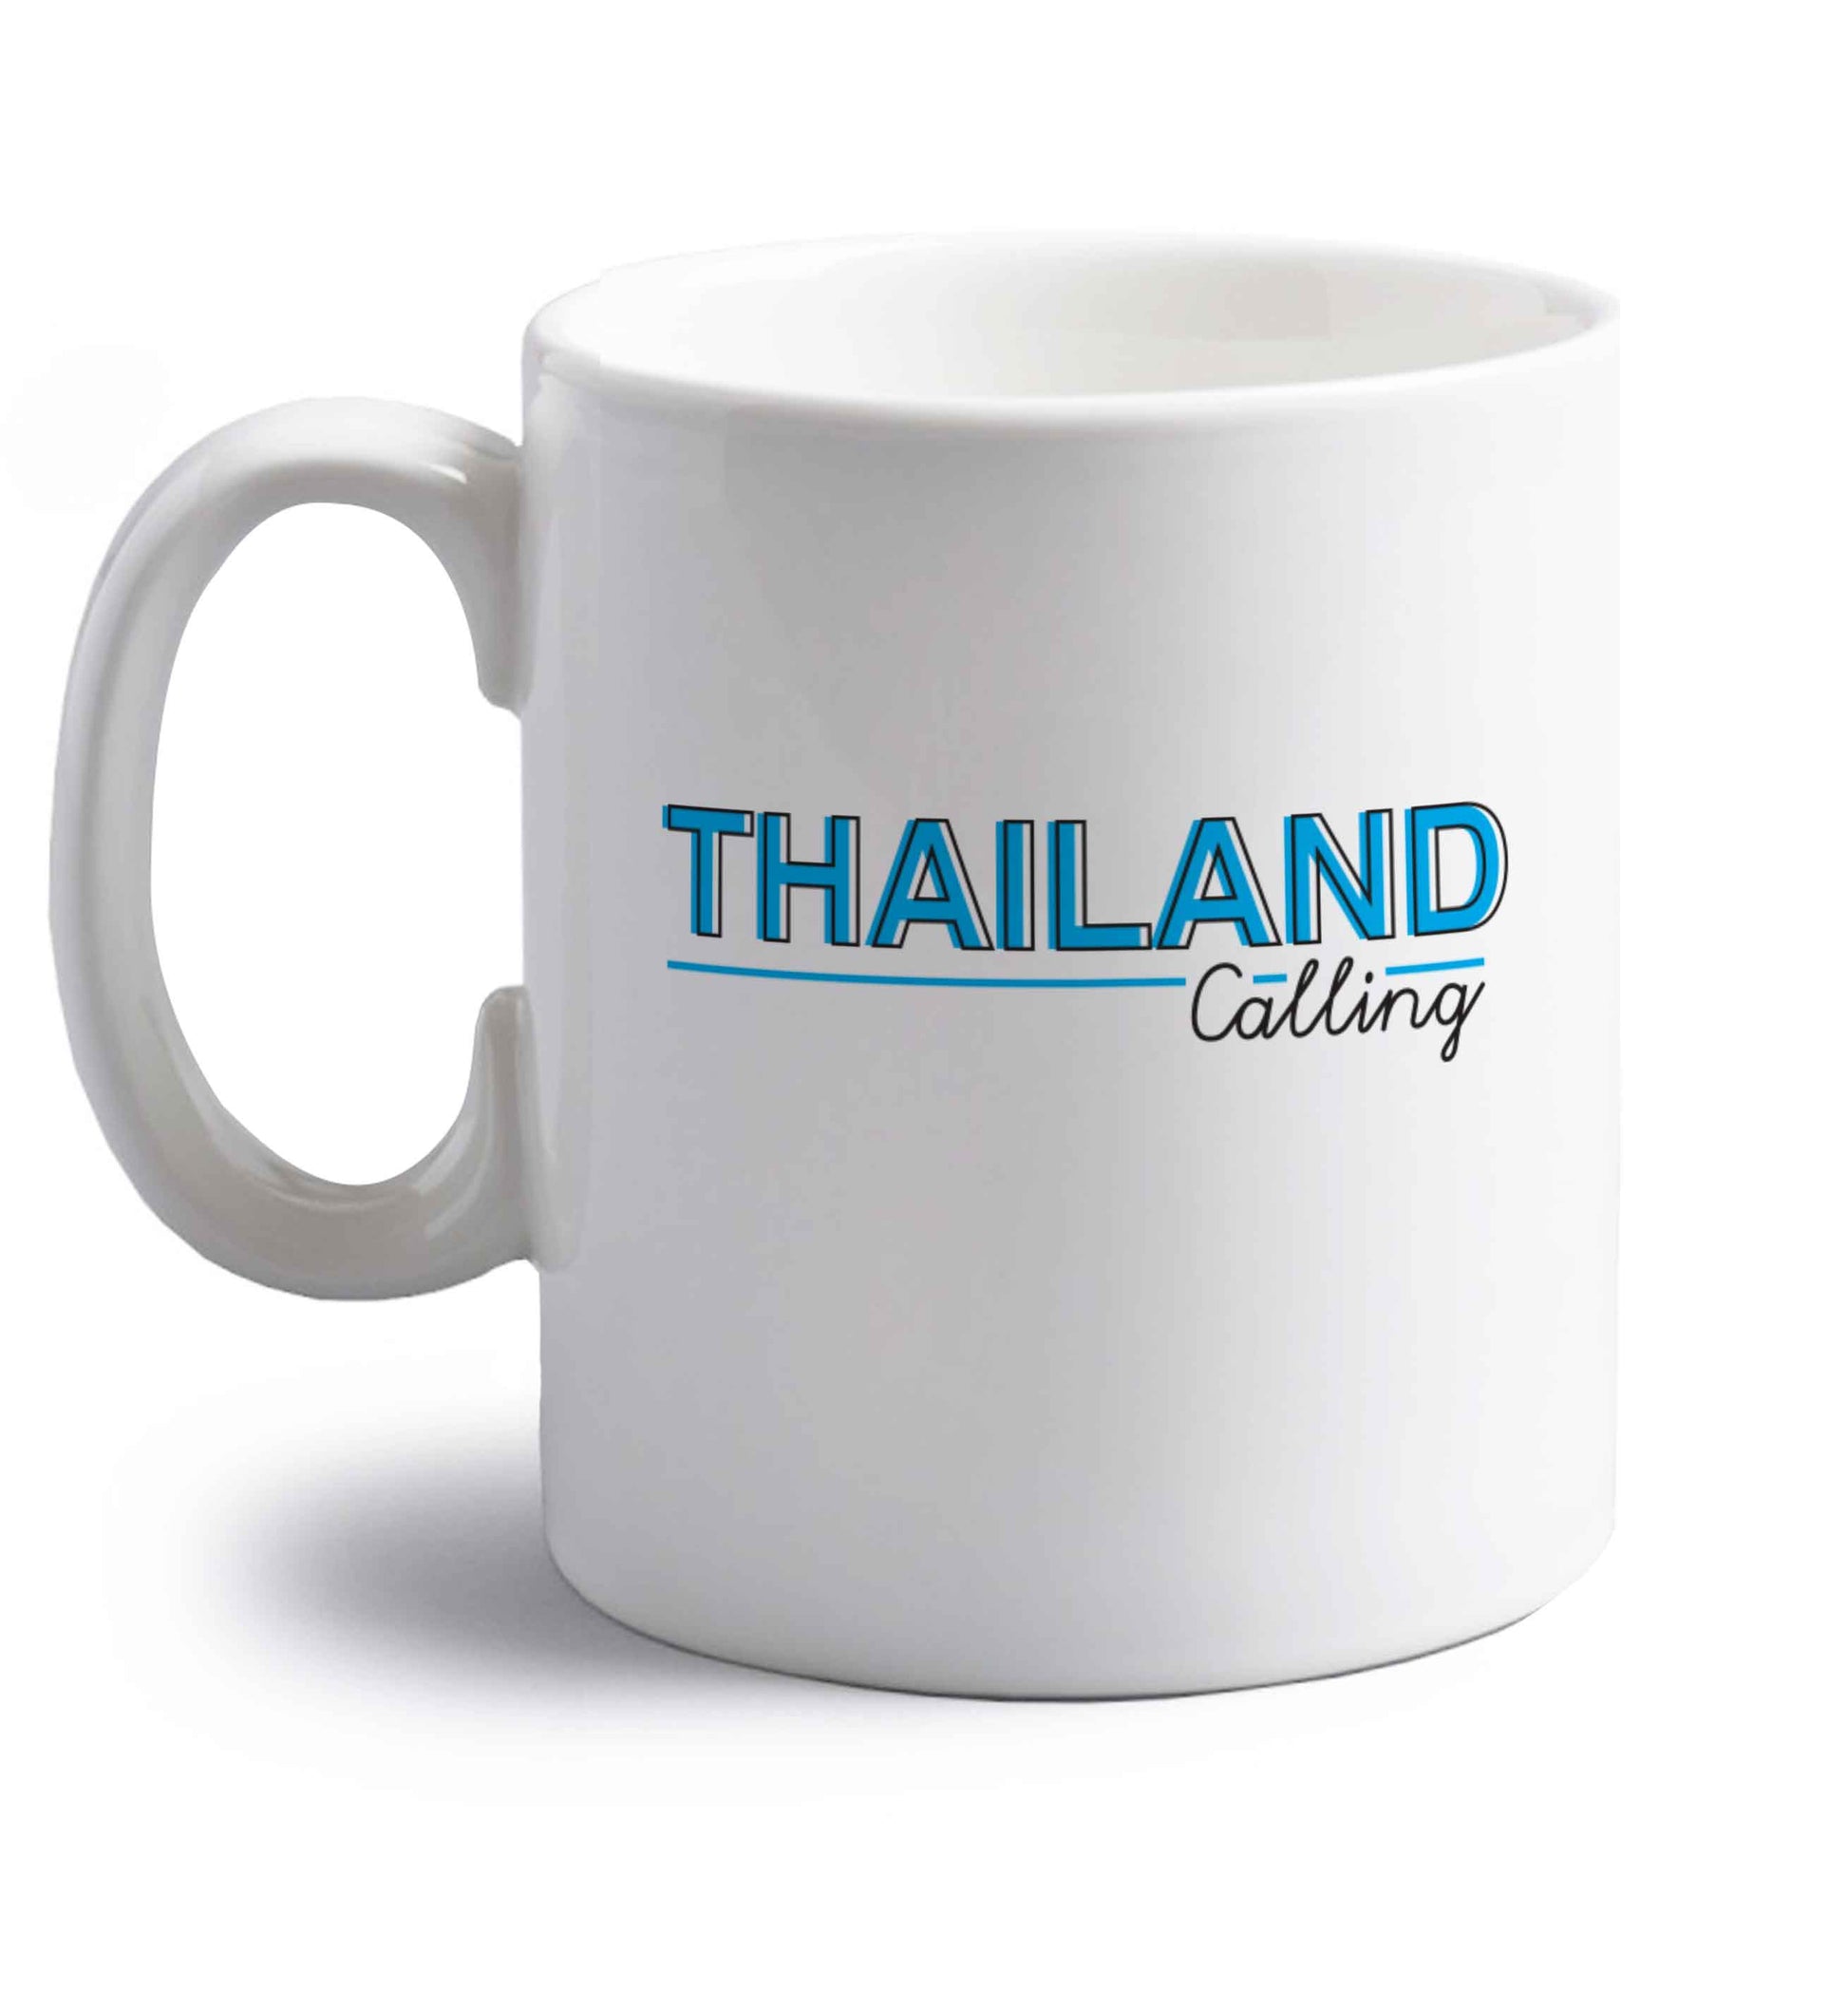 Thailand calling right handed white ceramic mug 